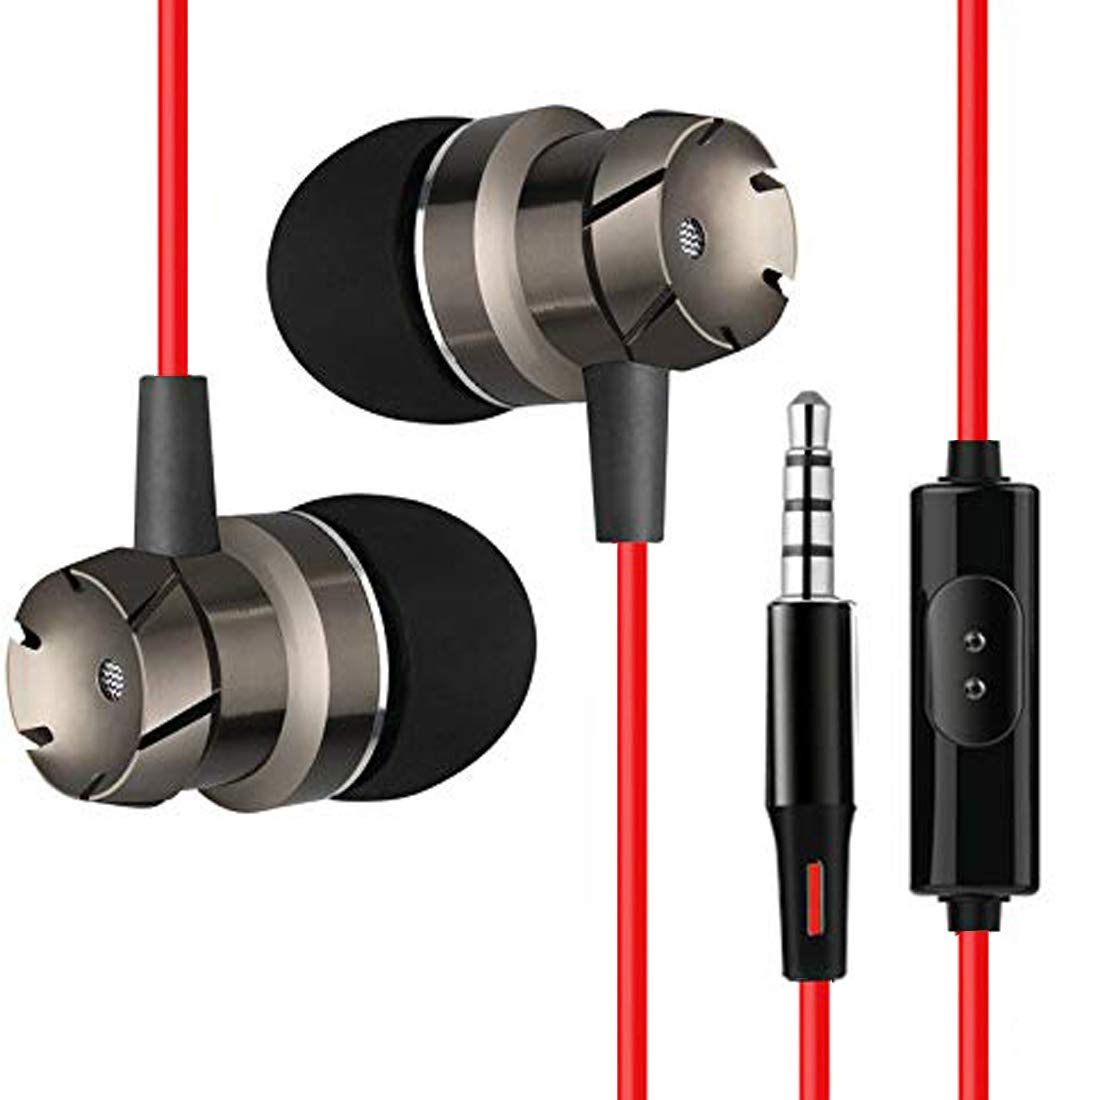 PTron HBE6 Headphone Metal Earphone in-Ear Wired Headset with Mic 6 Months Warranty